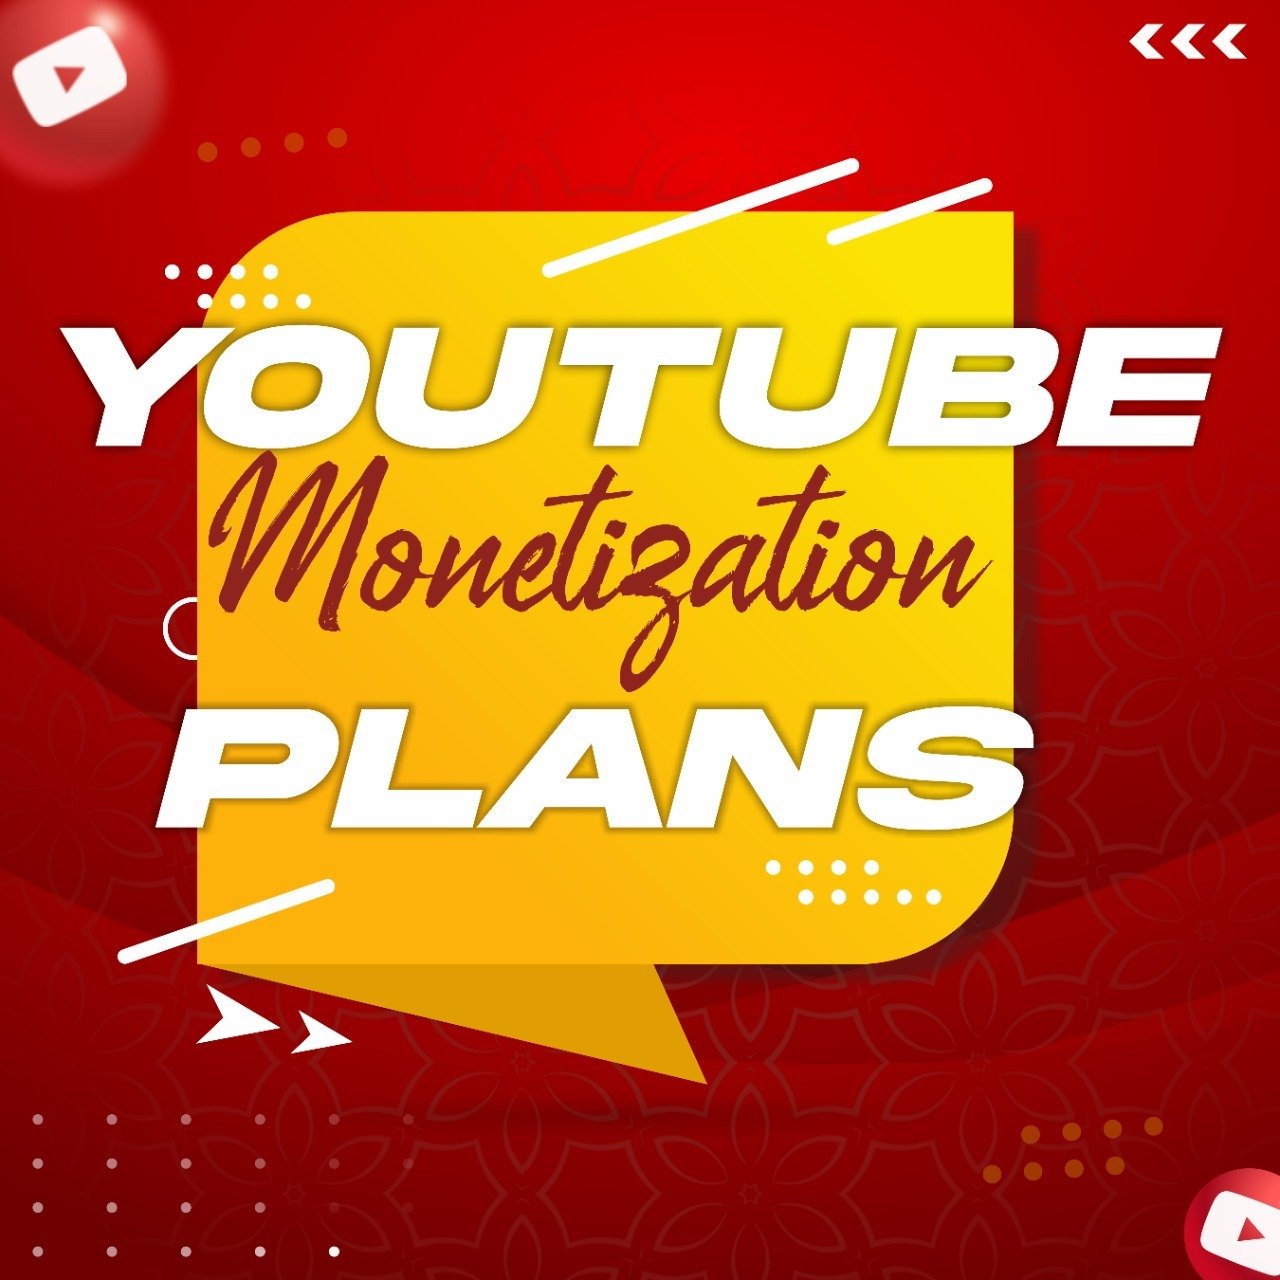 YouTube Monetization Plans